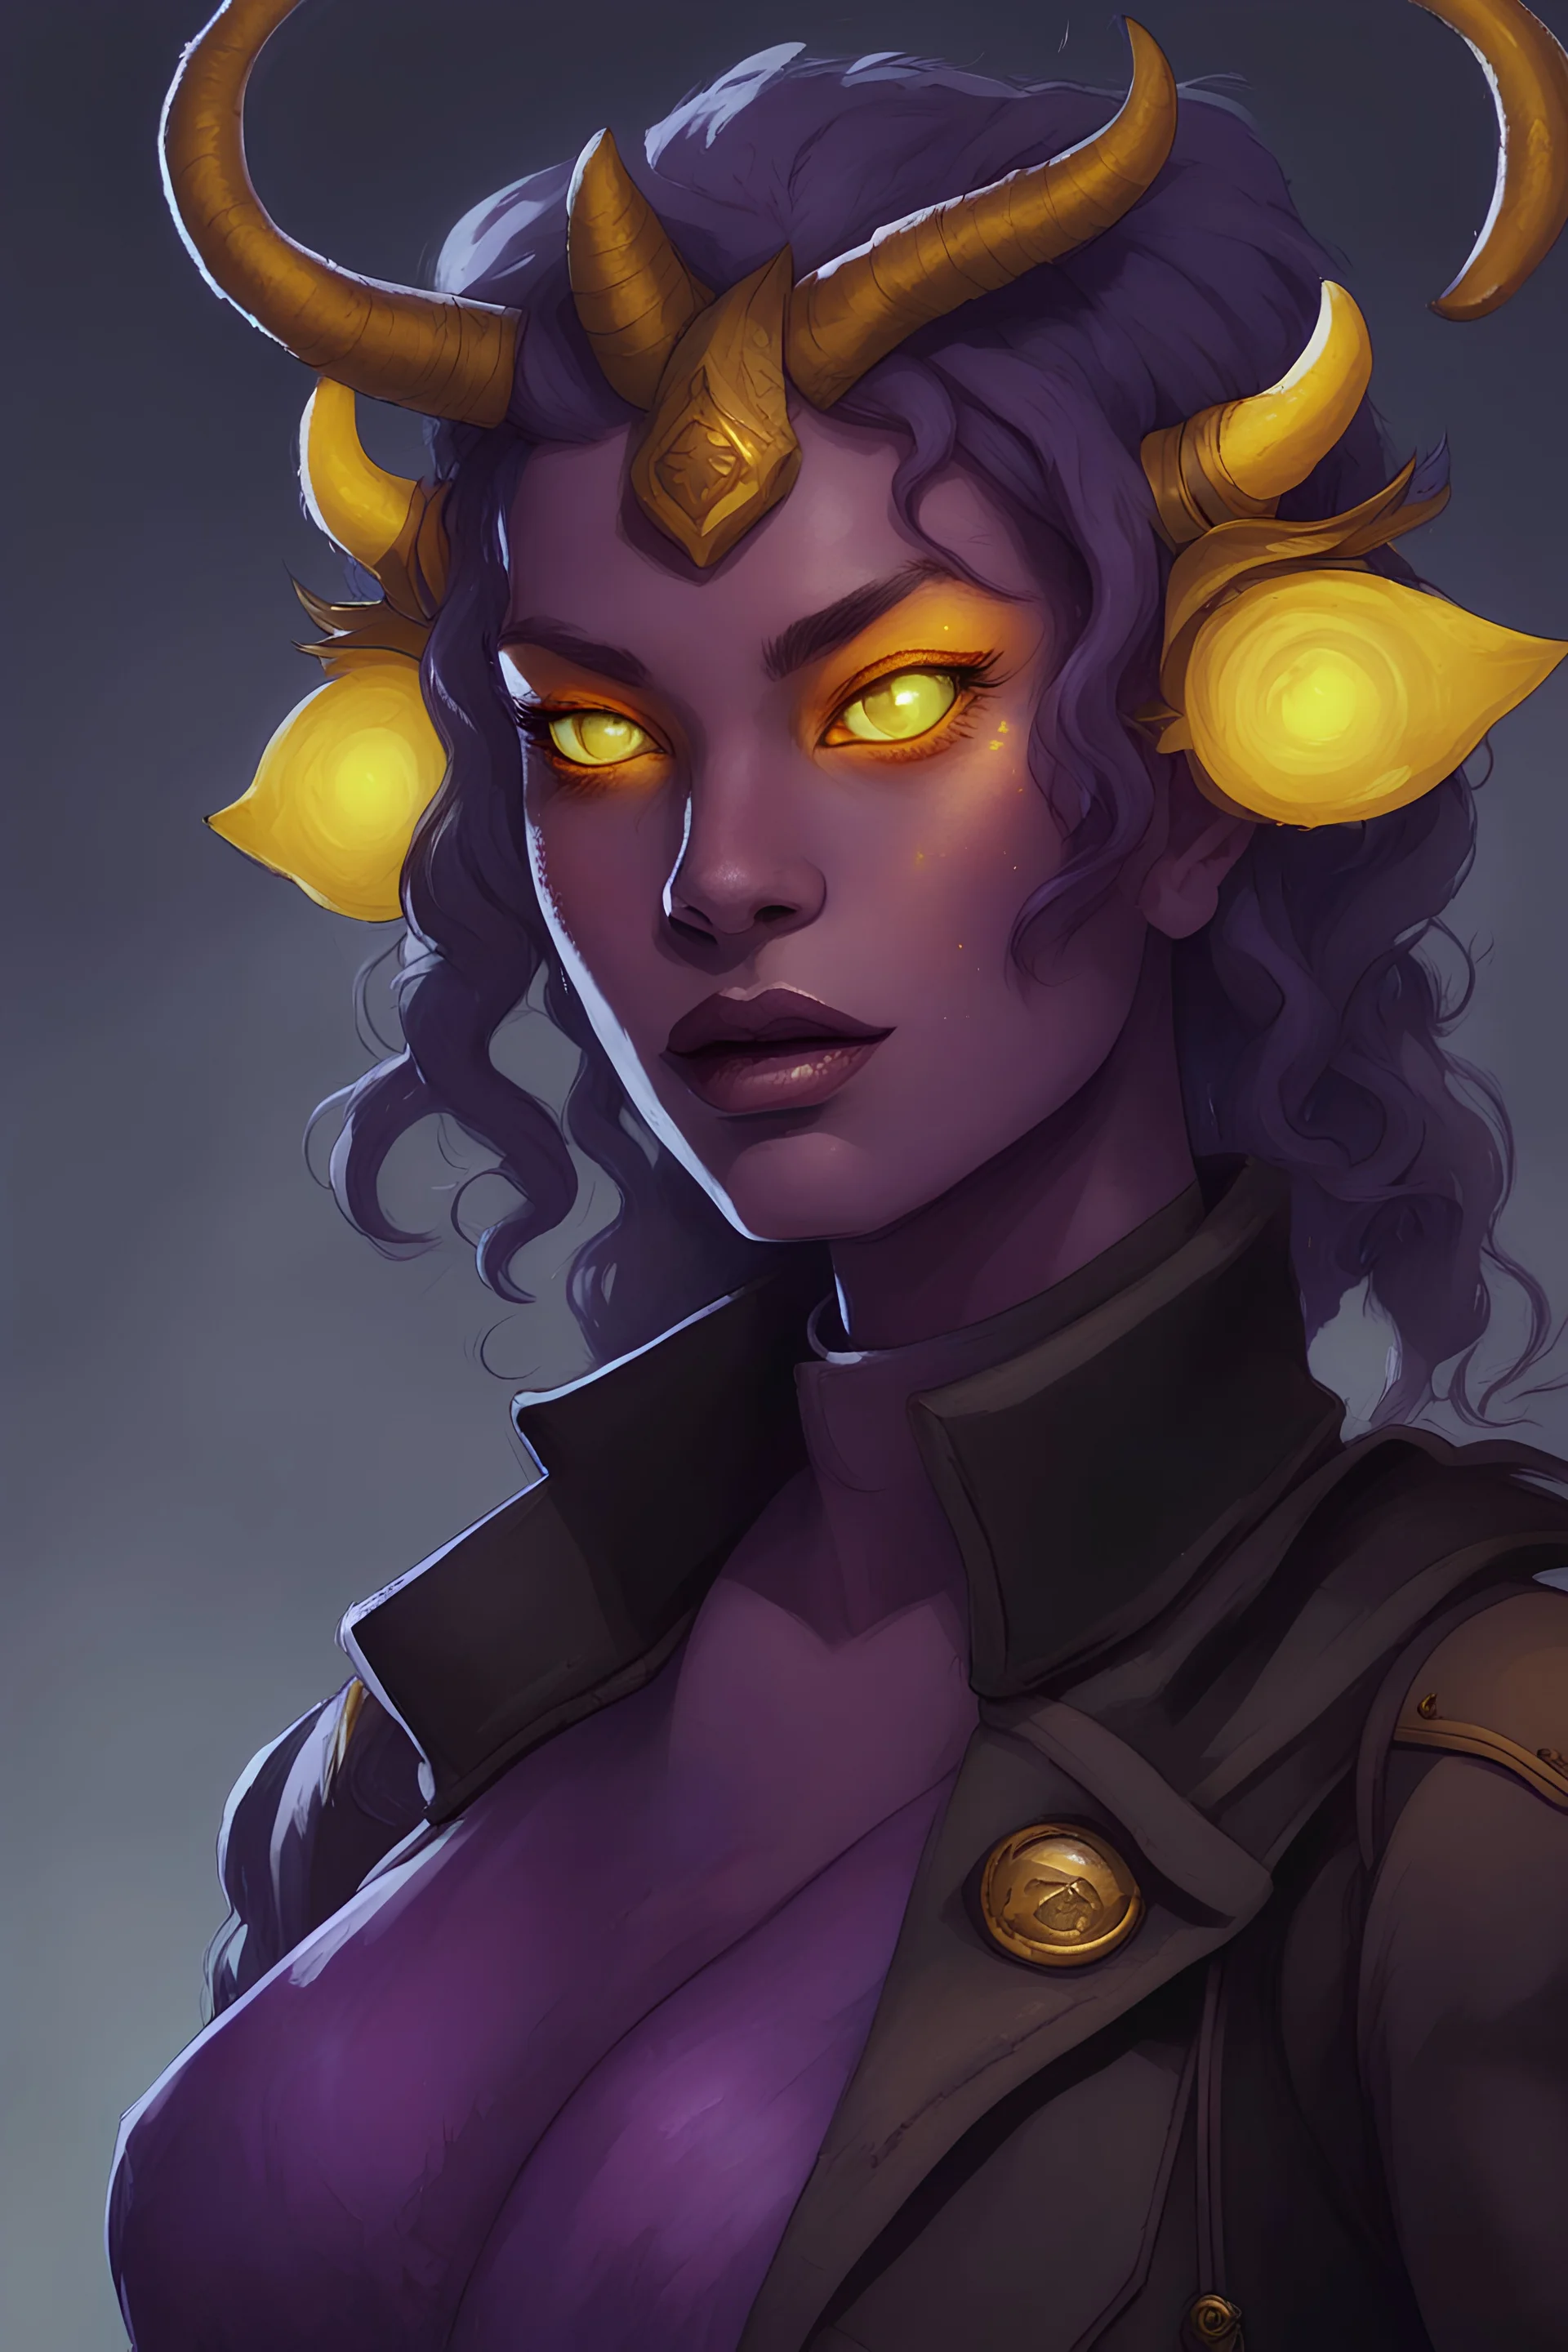 Purple-skinned female tiefling in milltary attire with glowing yellow eye